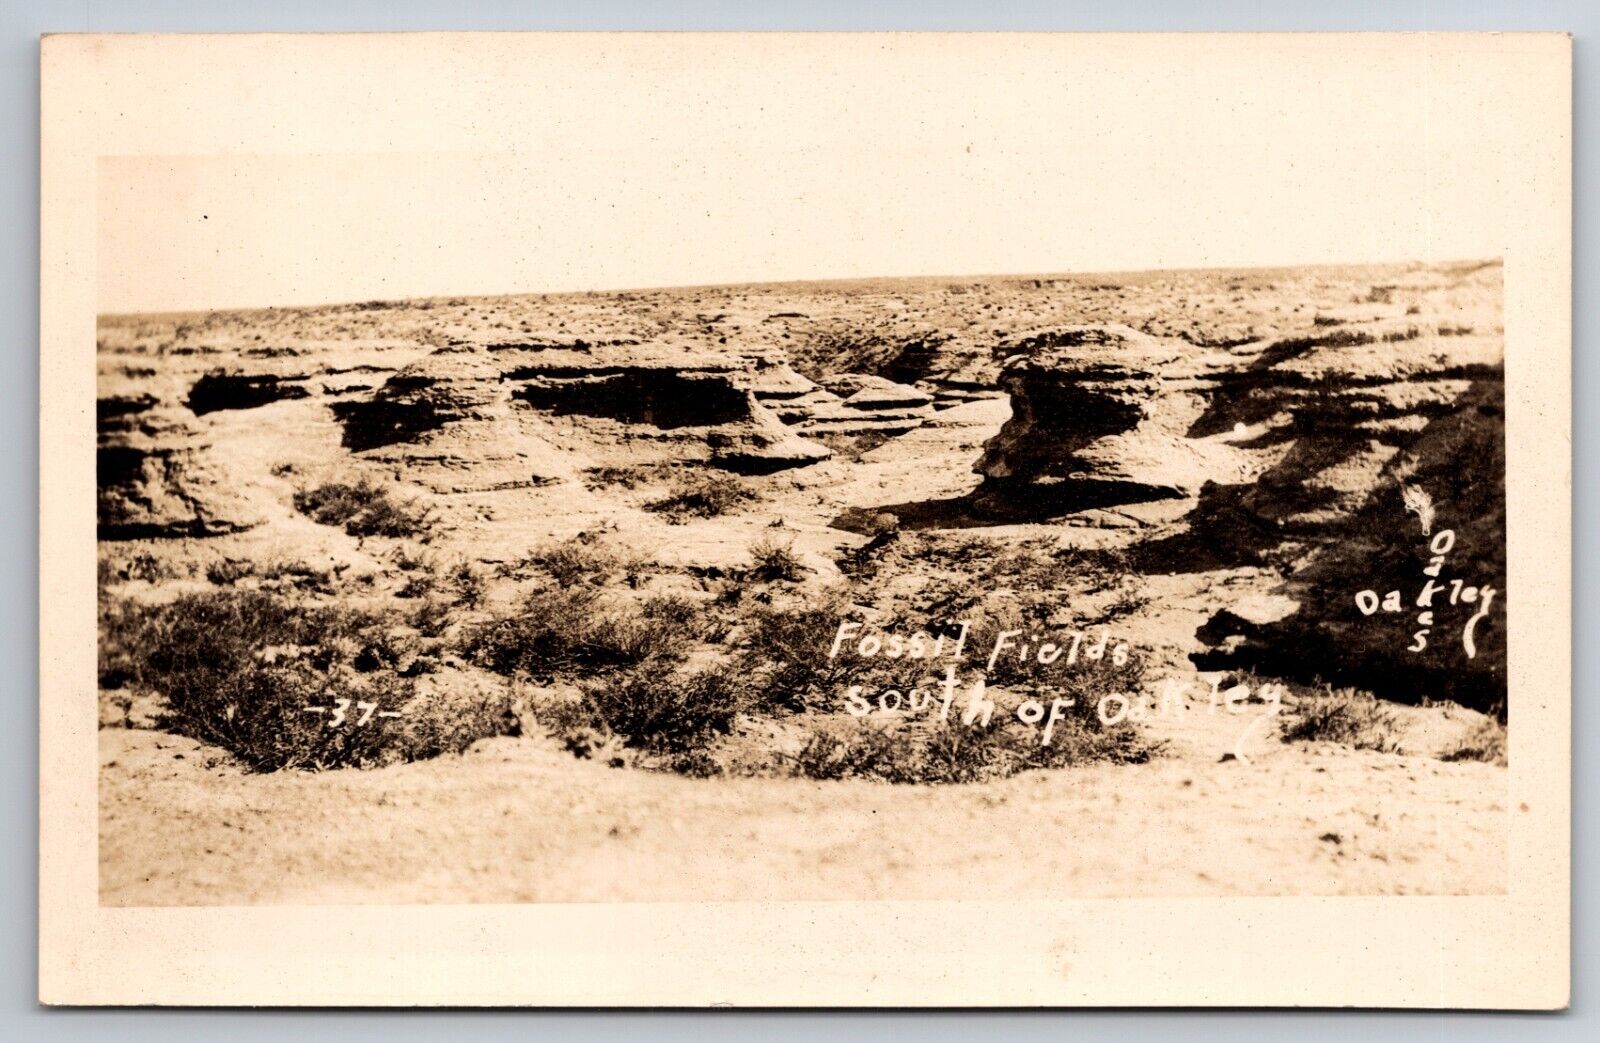 Fossil Fields South of Oakley Kansas KS Oakes c1930 Real Photo RPPC